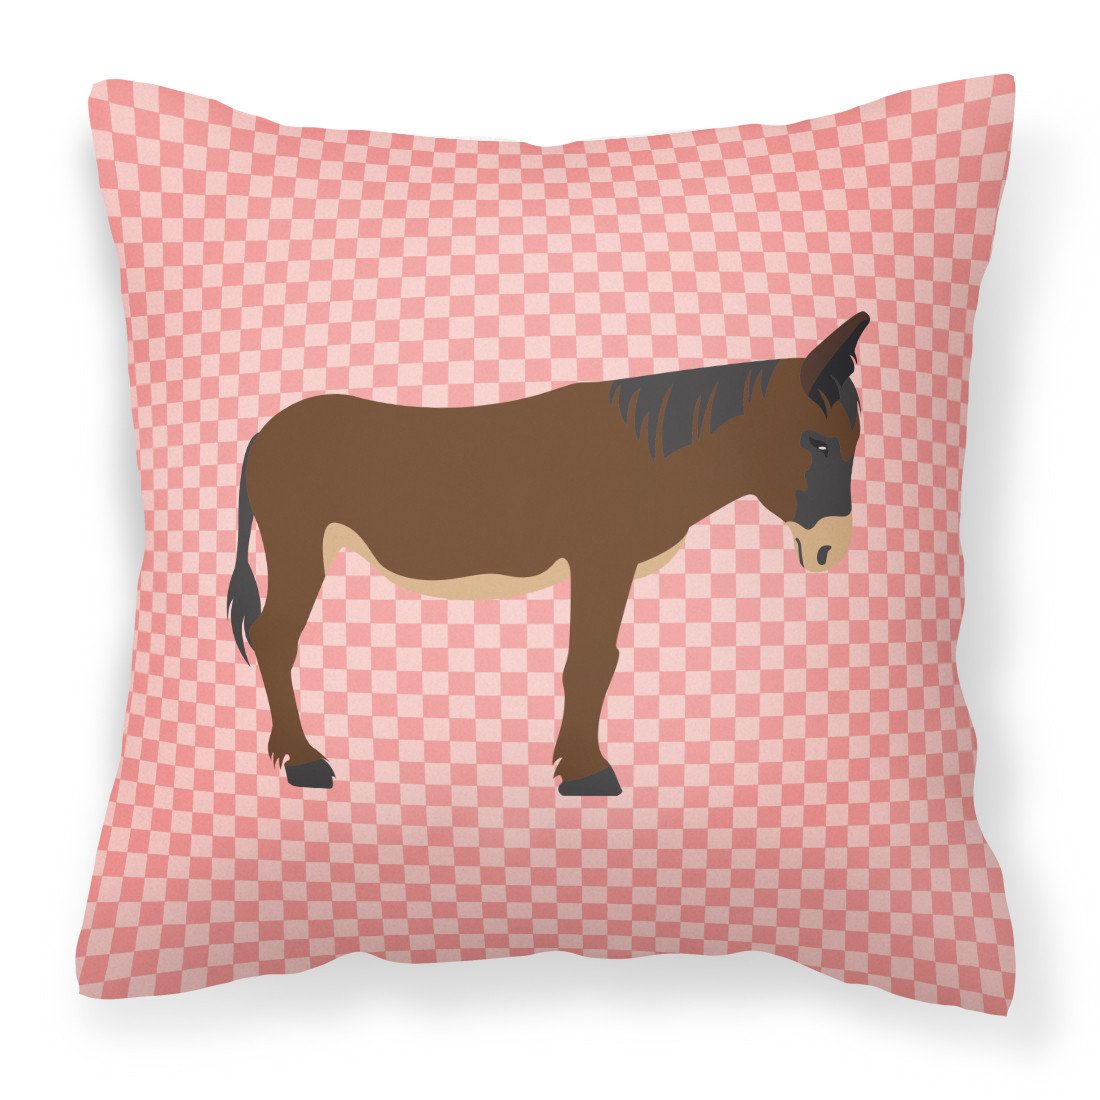 Zamorano-Leones Donkey Pink Check Fabric Decorative Pillow BB7853PW1818 by Caroline's Treasures